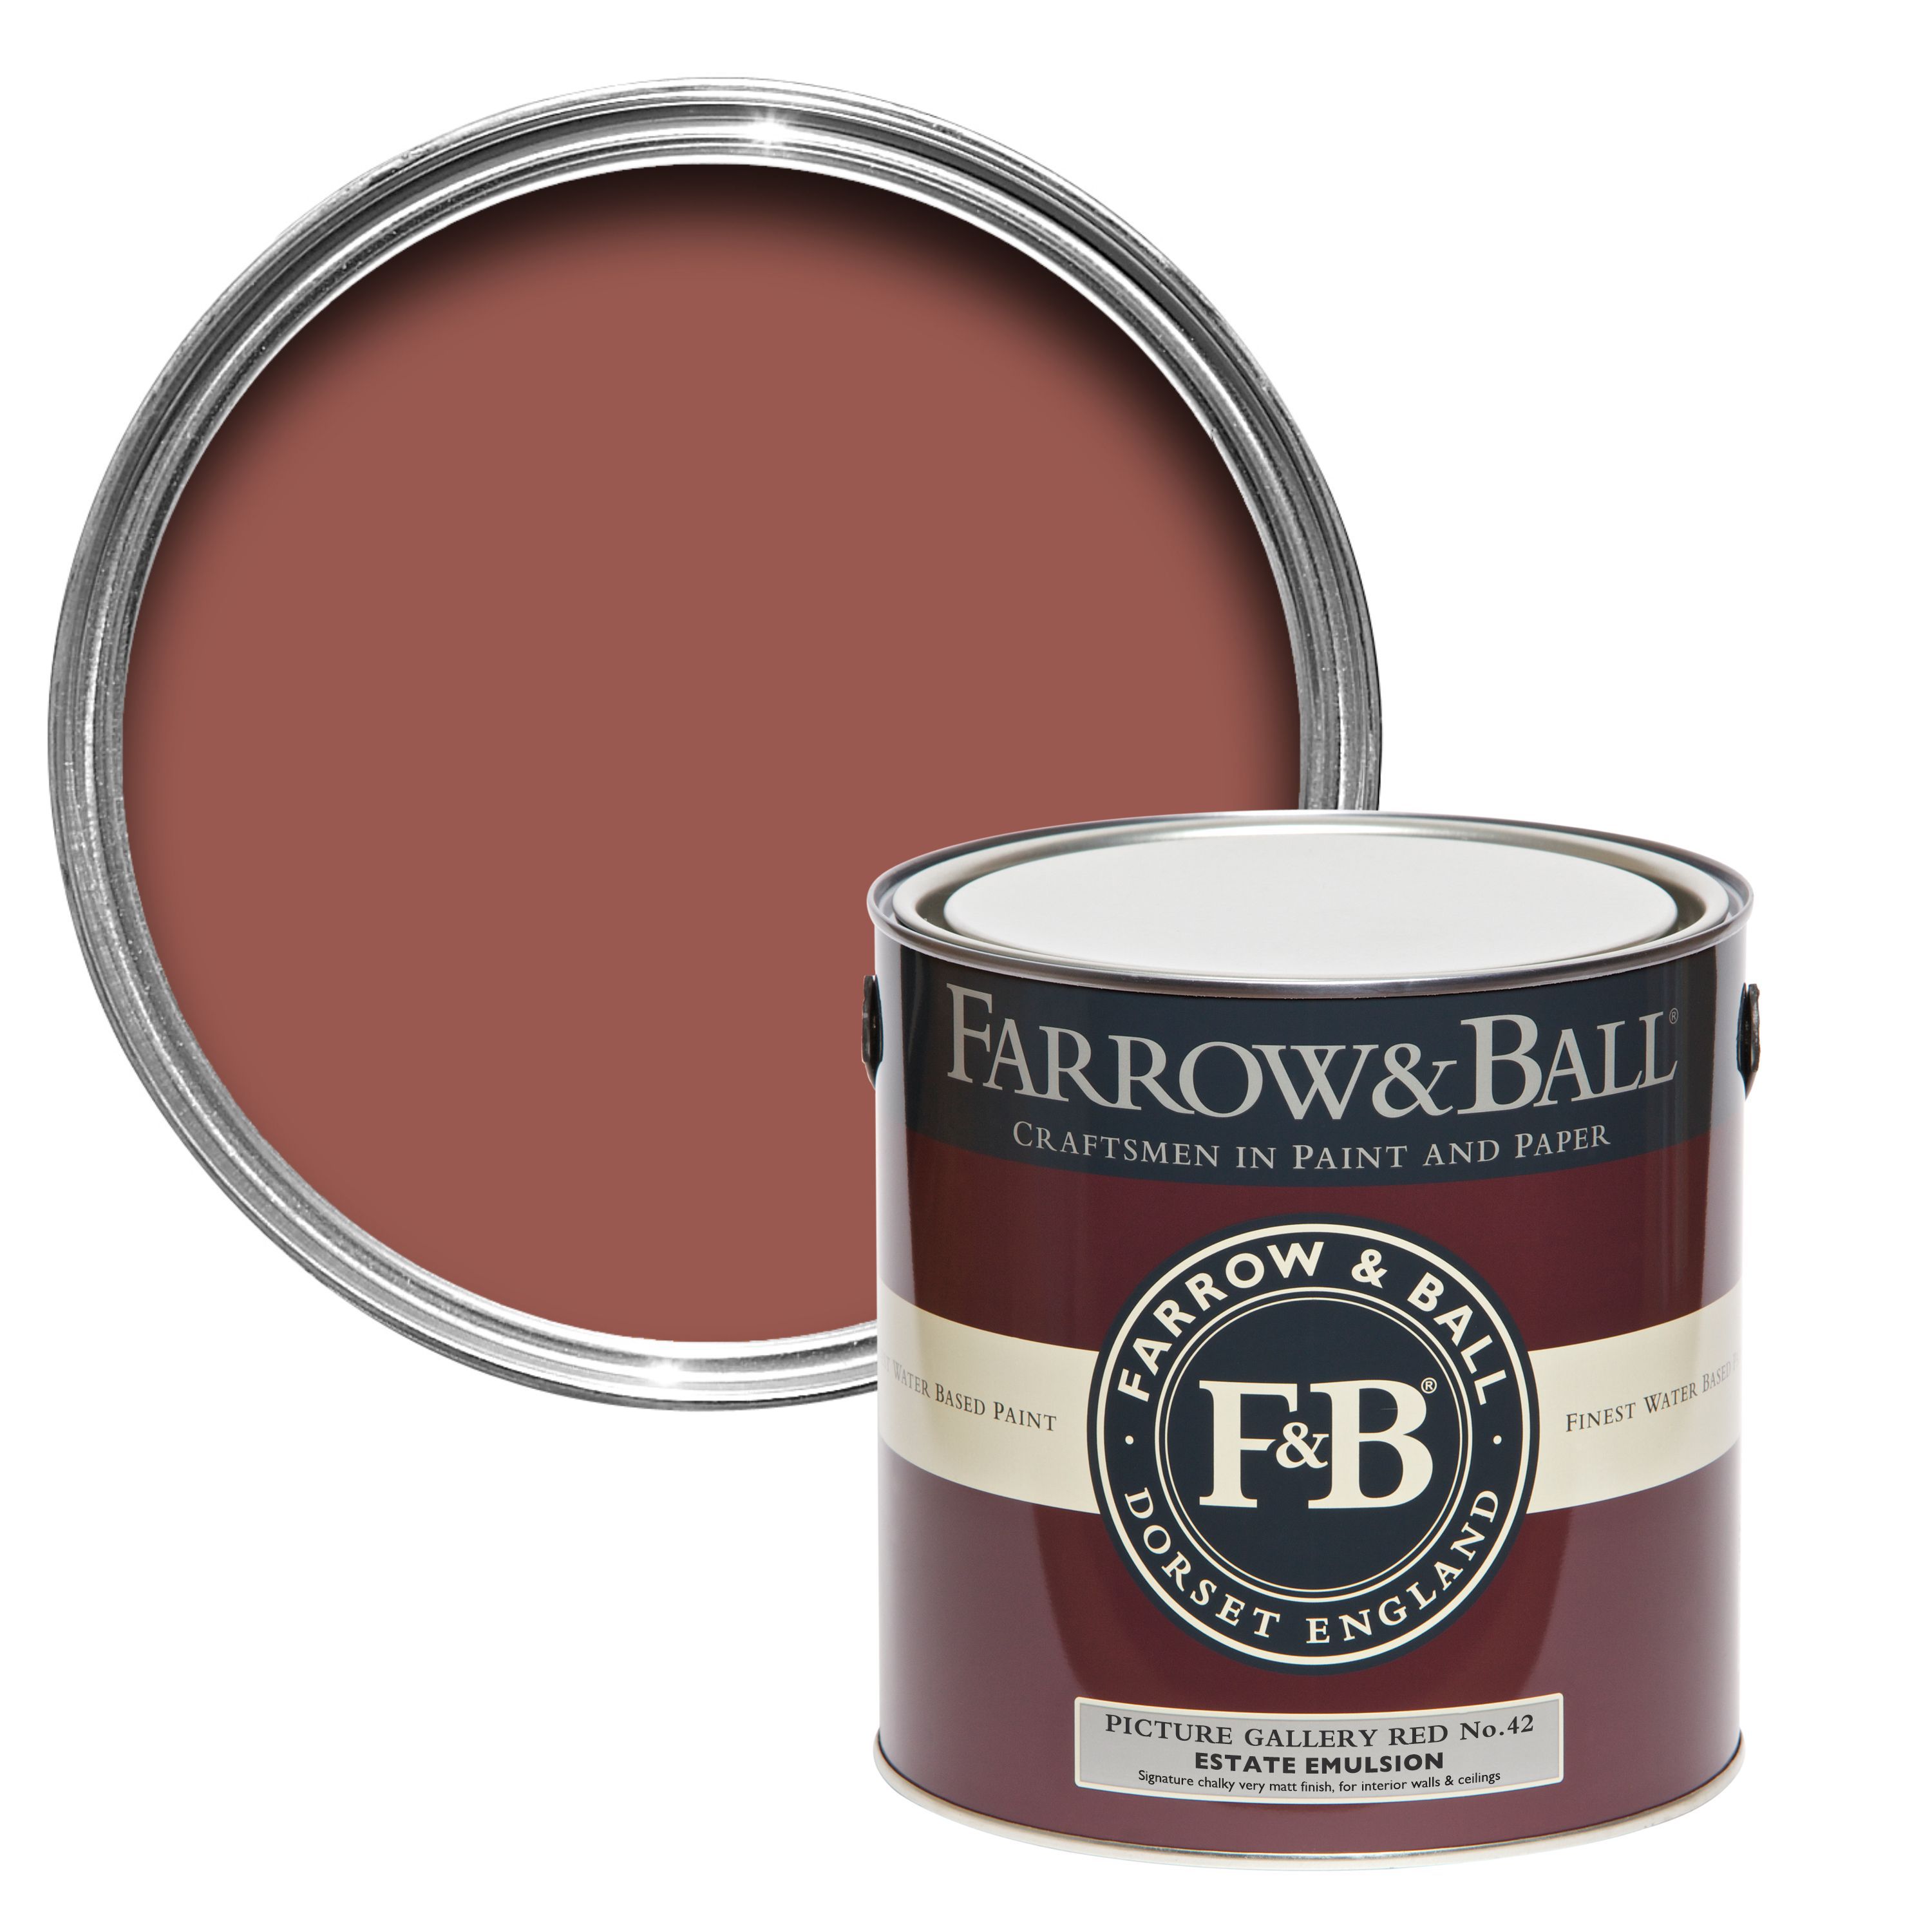 Farrow & Ball Estate Picture gallery red No.42 Matt Emulsion paint, 2.5L